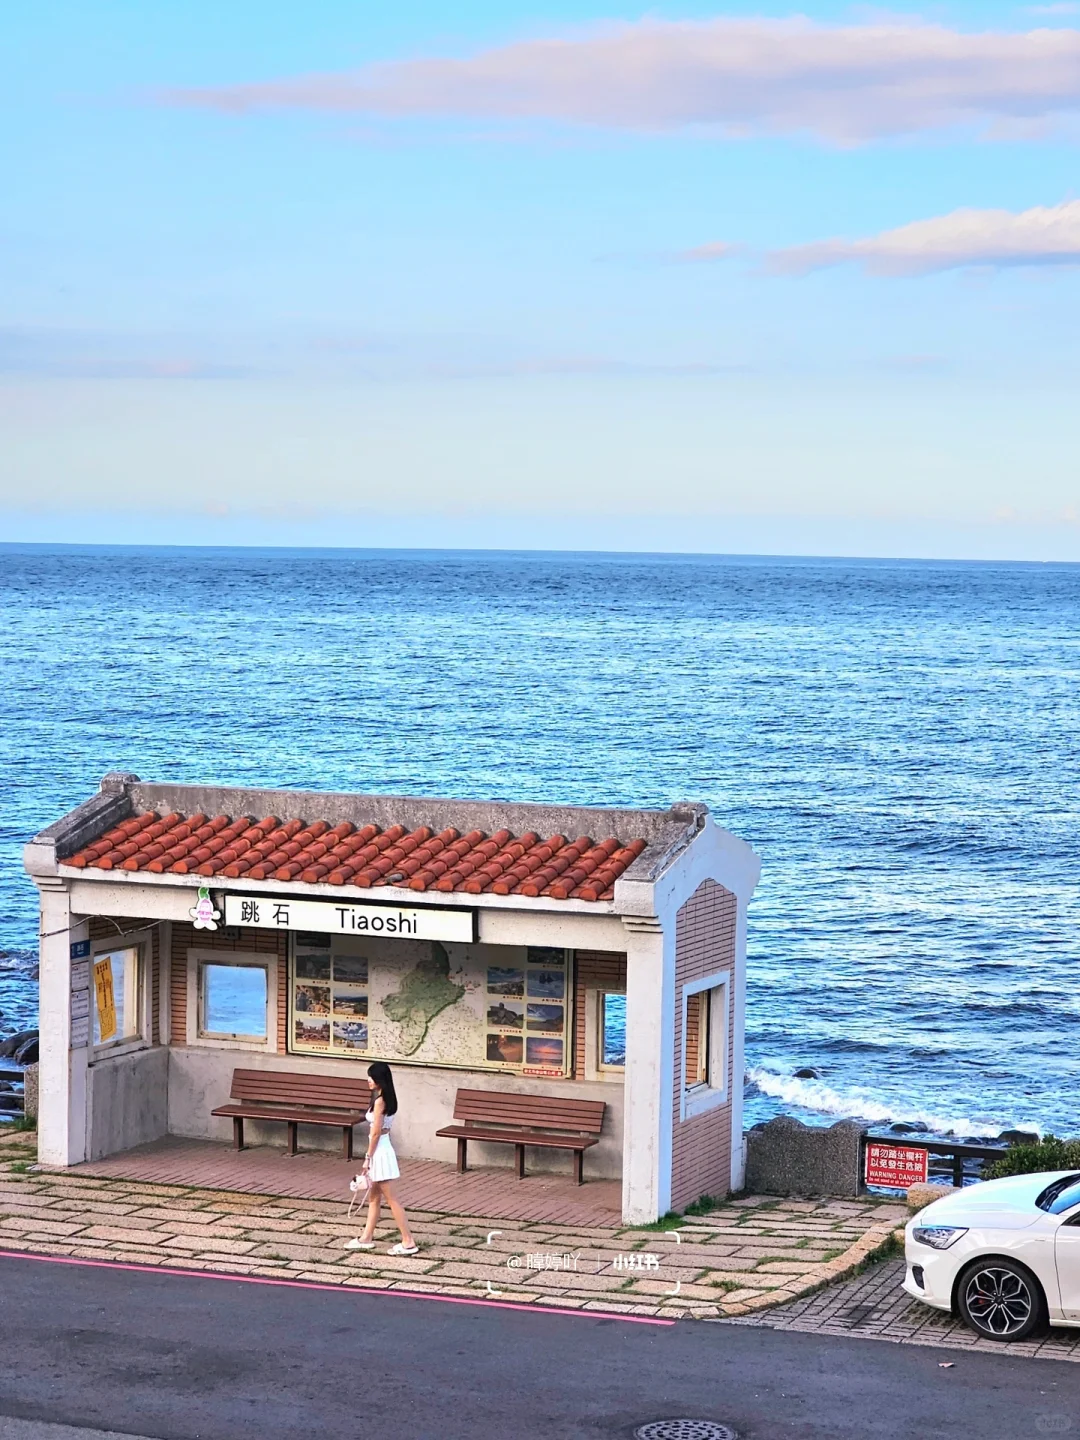 Taiwan-Jumping Stone Bus Station, a free photo spot at a super Japanese comic-style beach villa